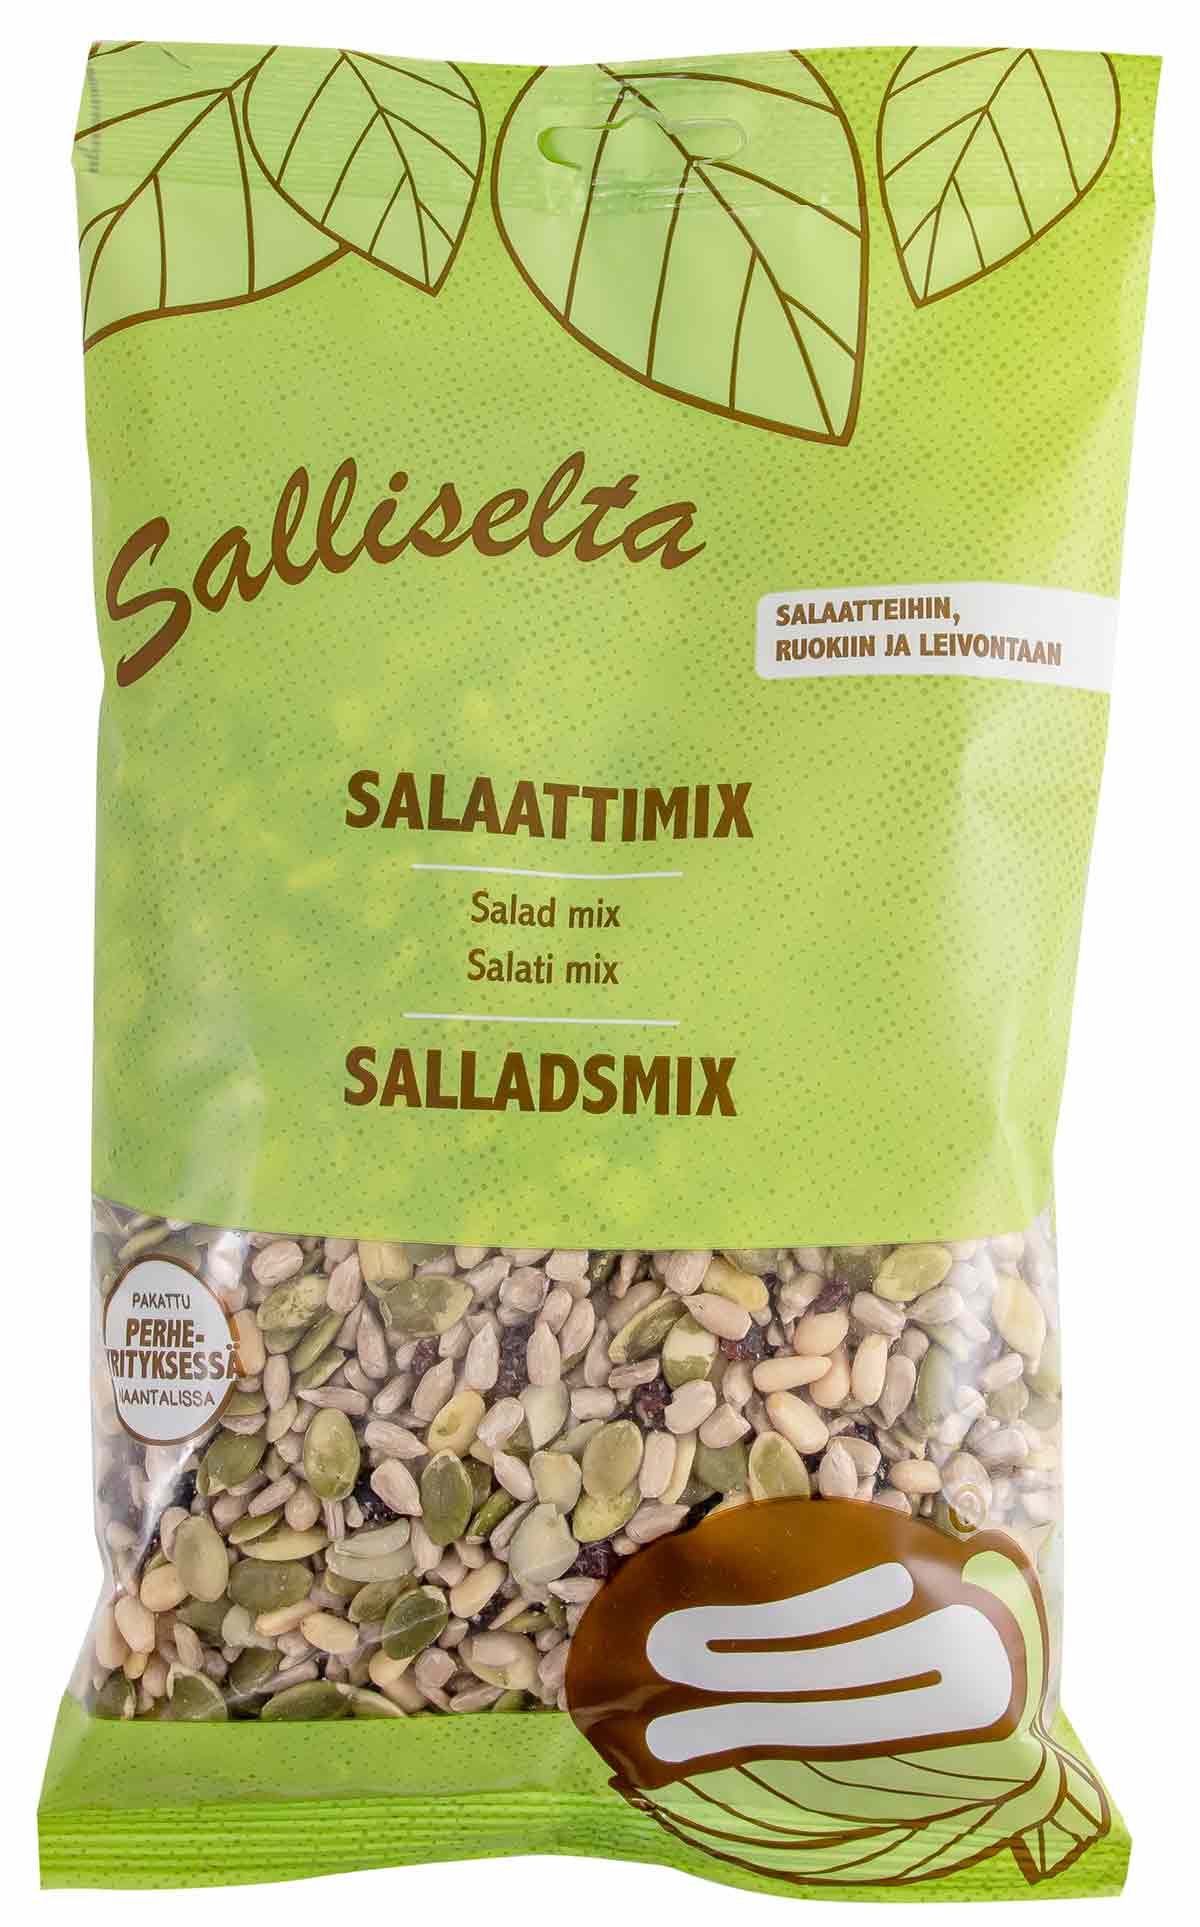 Salad mix 400g